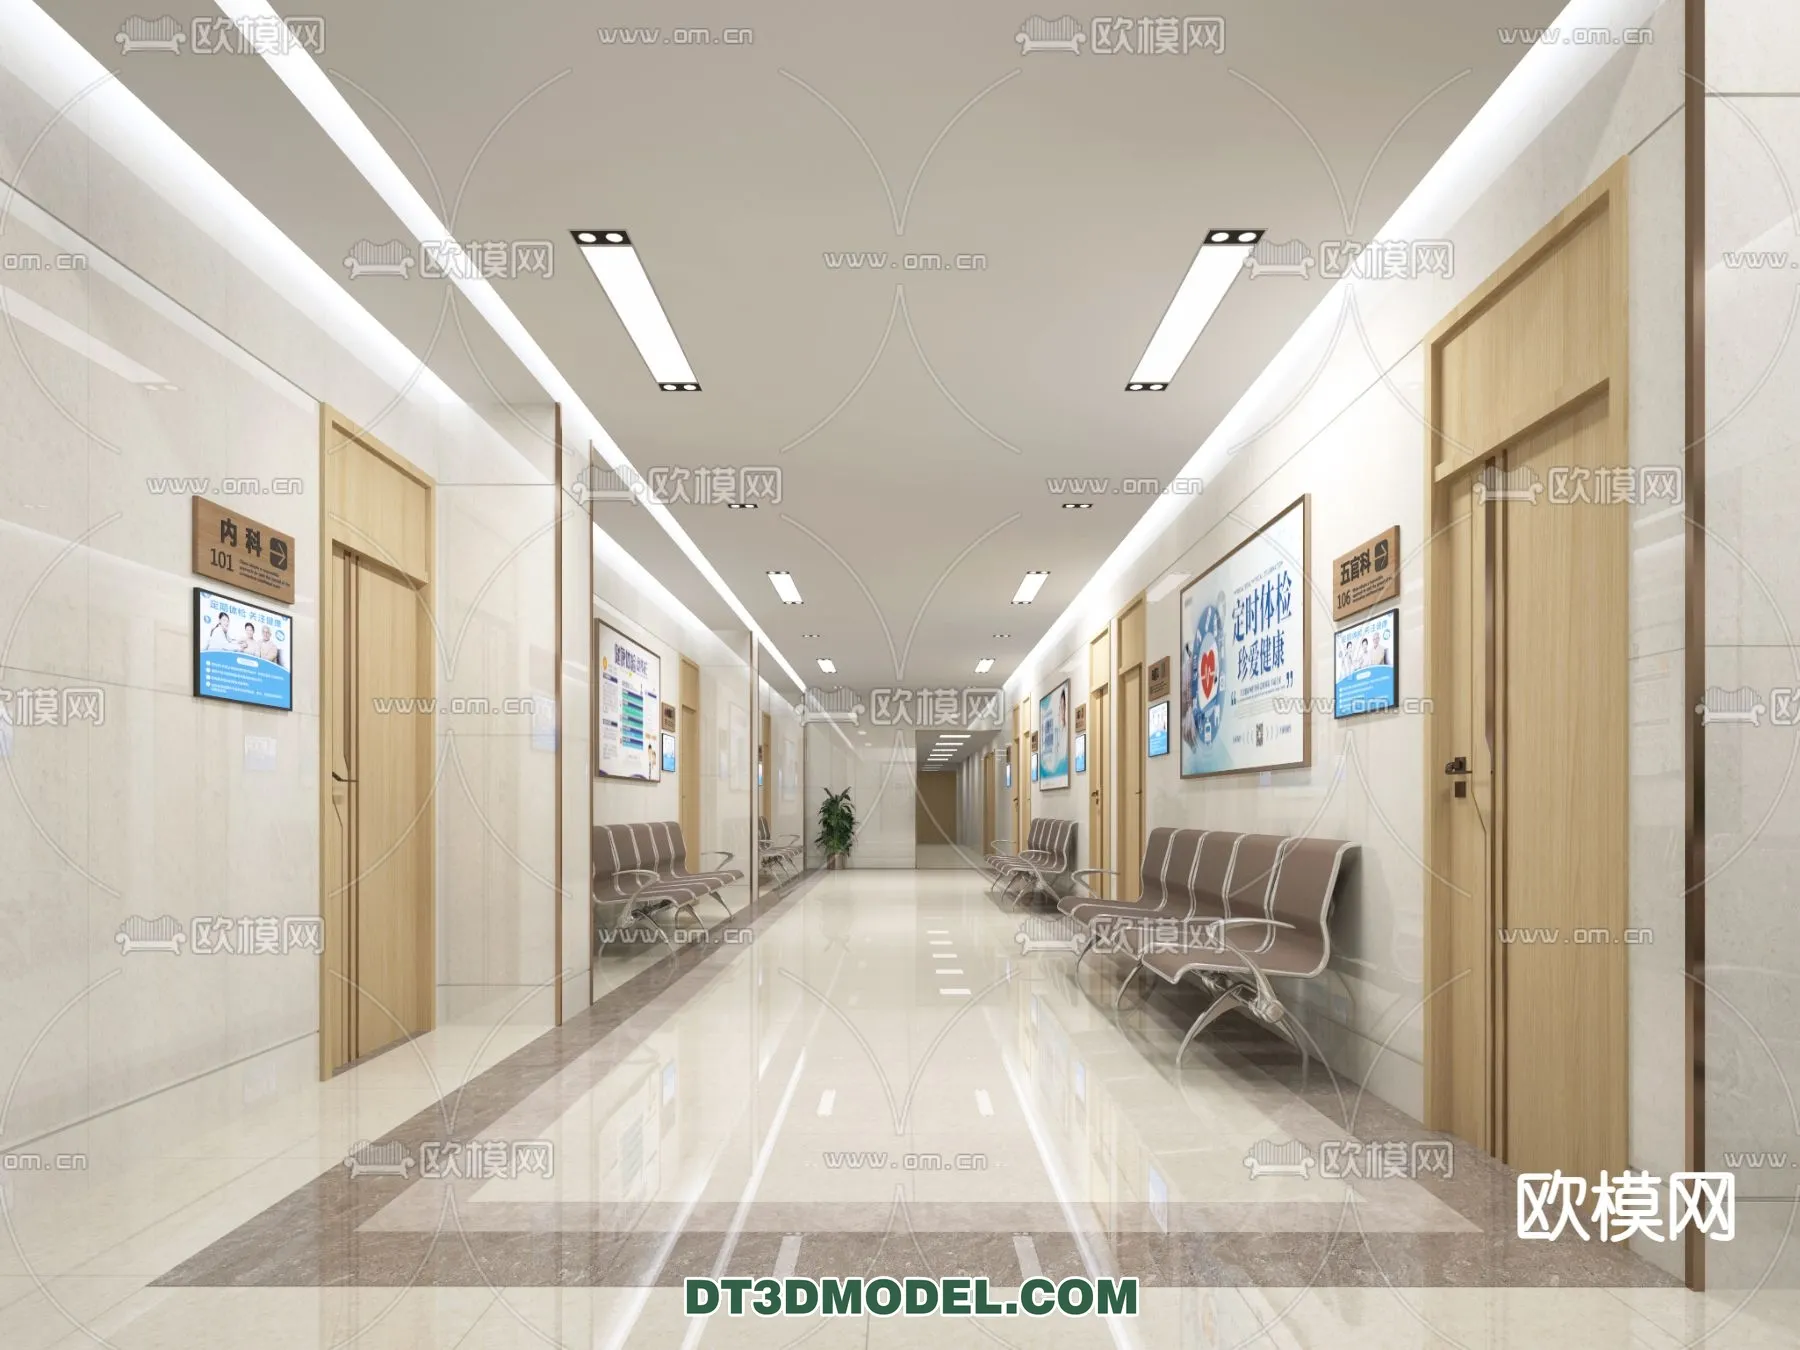 HOSPITAL 3D SCENES – MODERN – 0152